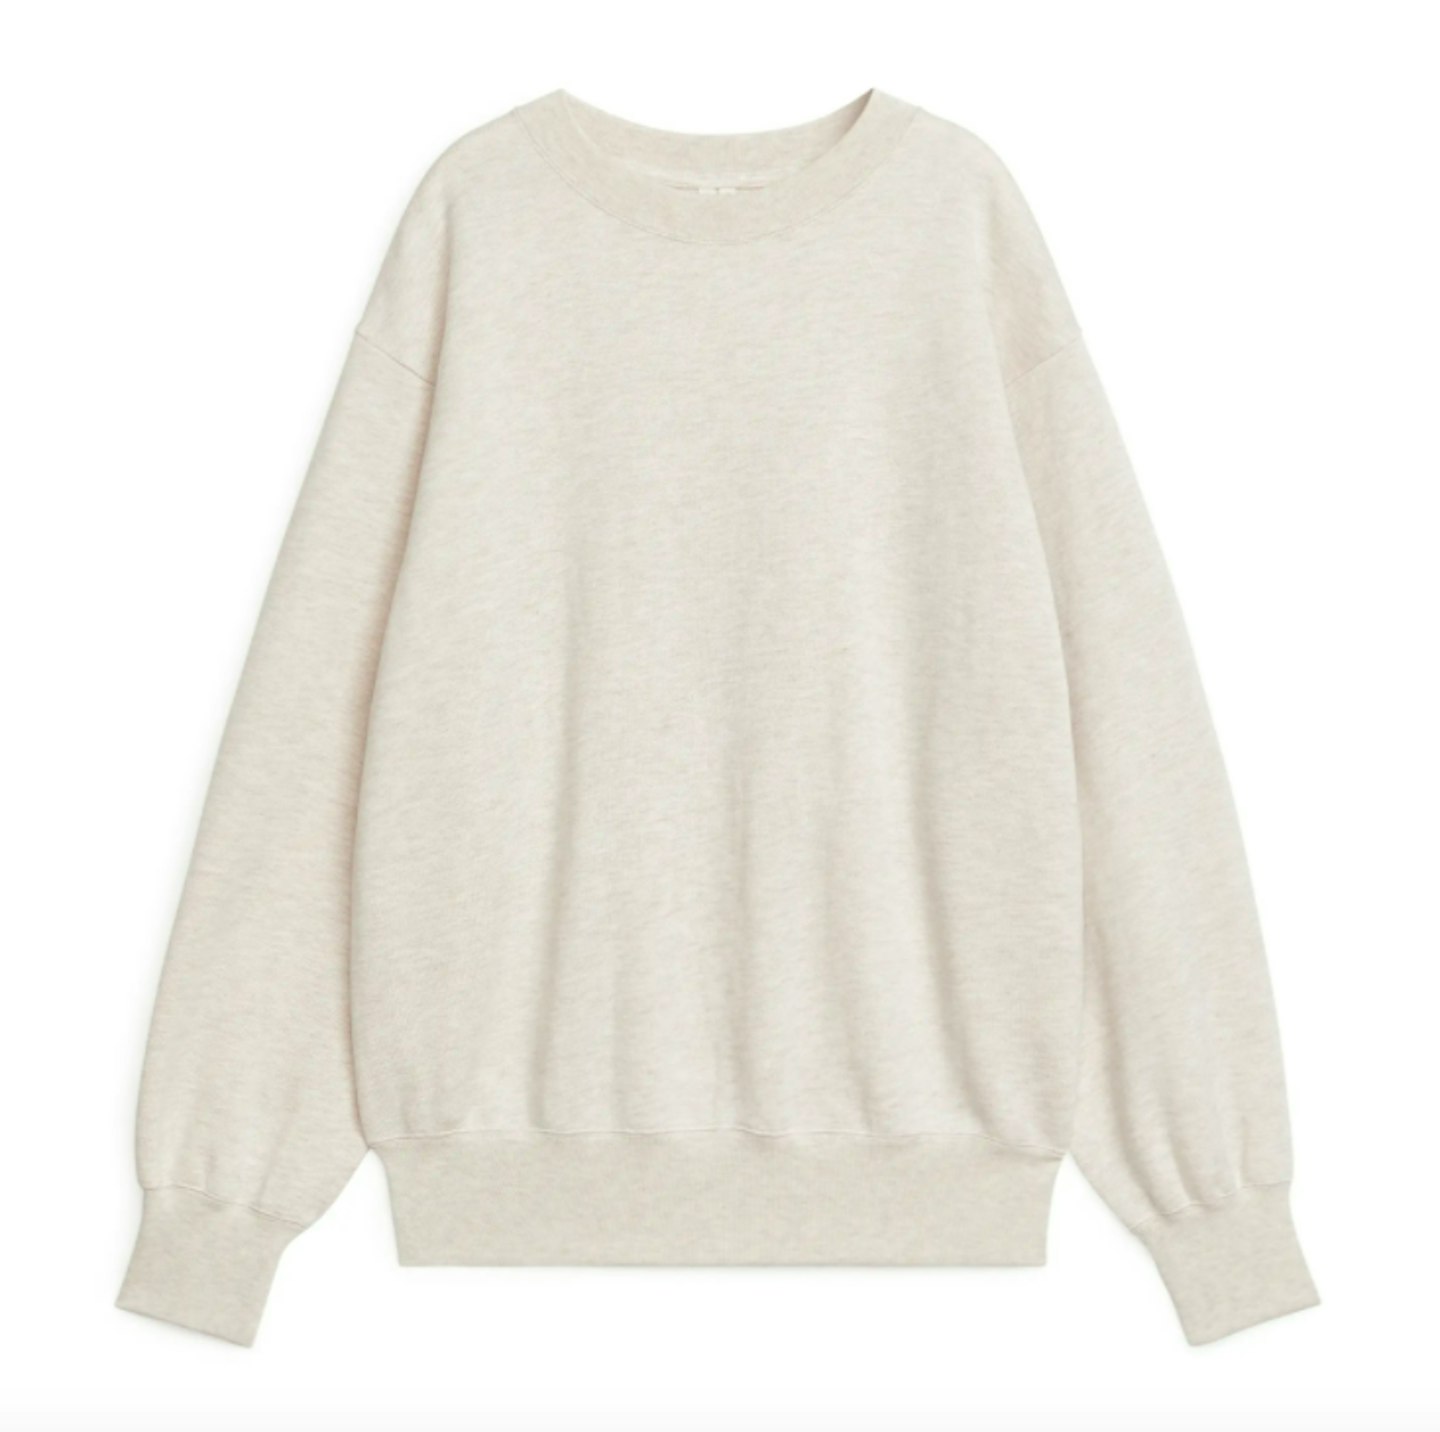 Arket, Soft Oversized Sweatshirt, £45